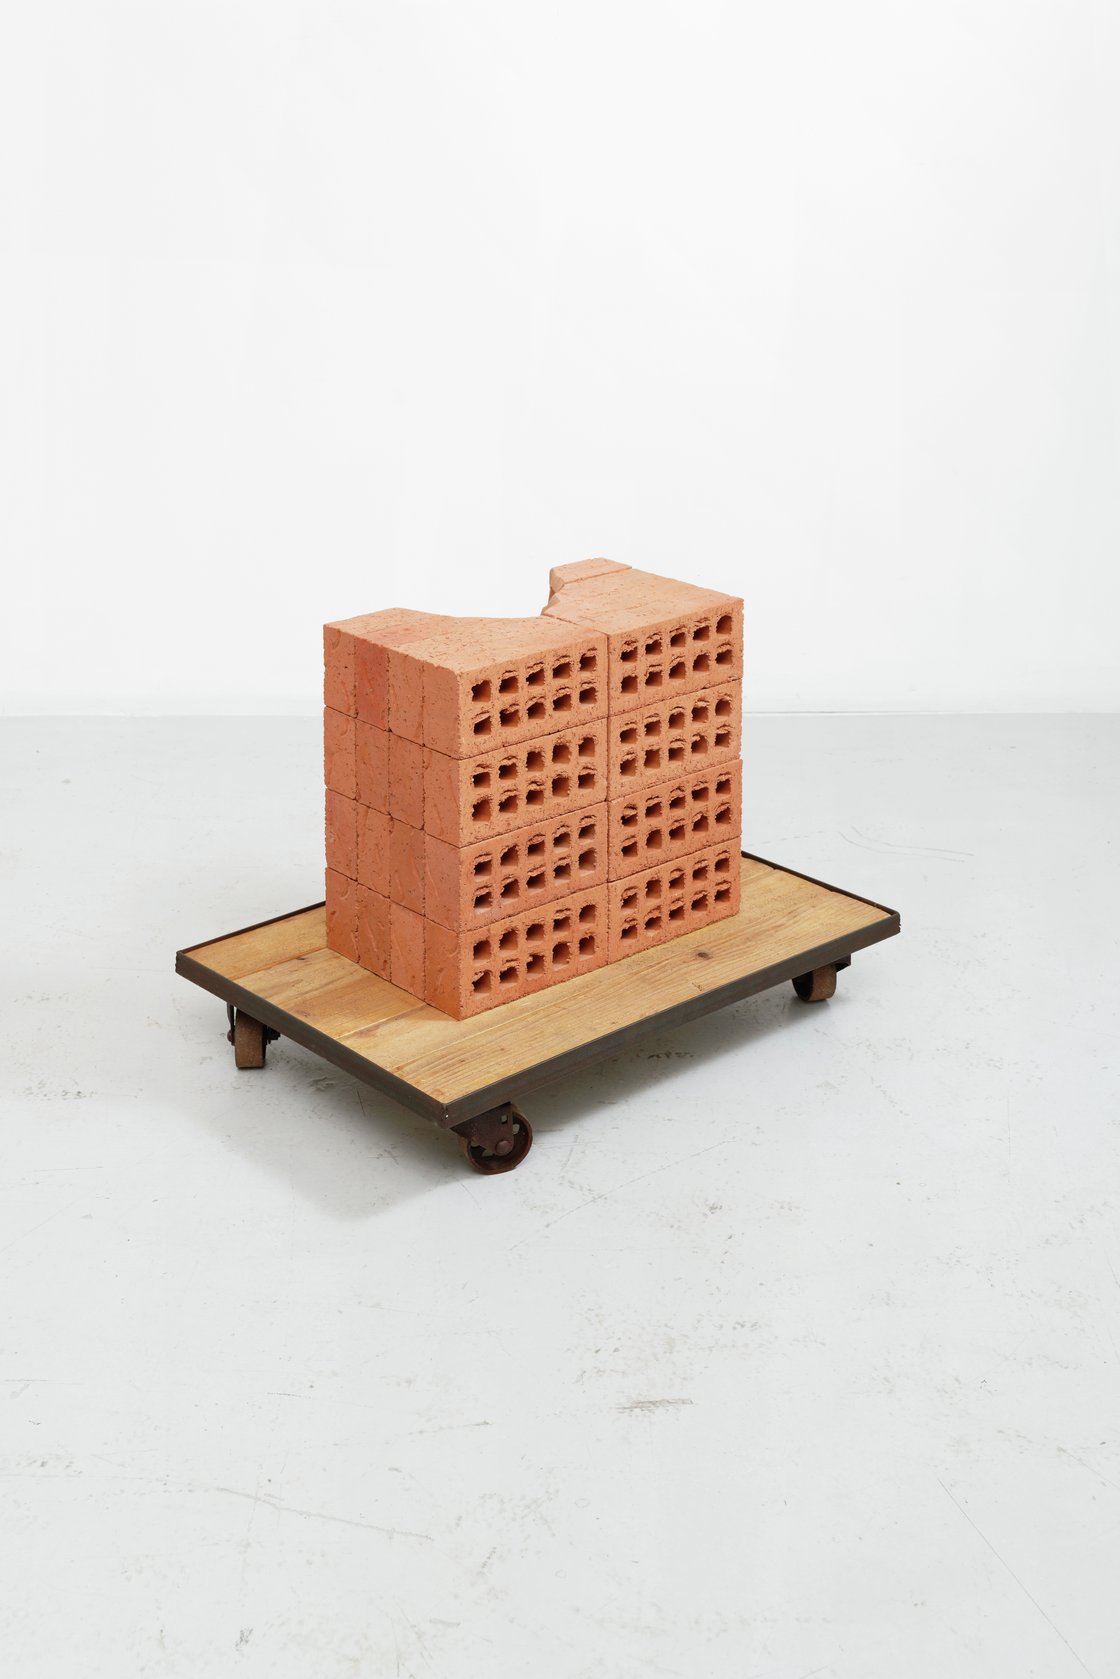 Mona Hatoum, A Pile of Bricks VI, 2021